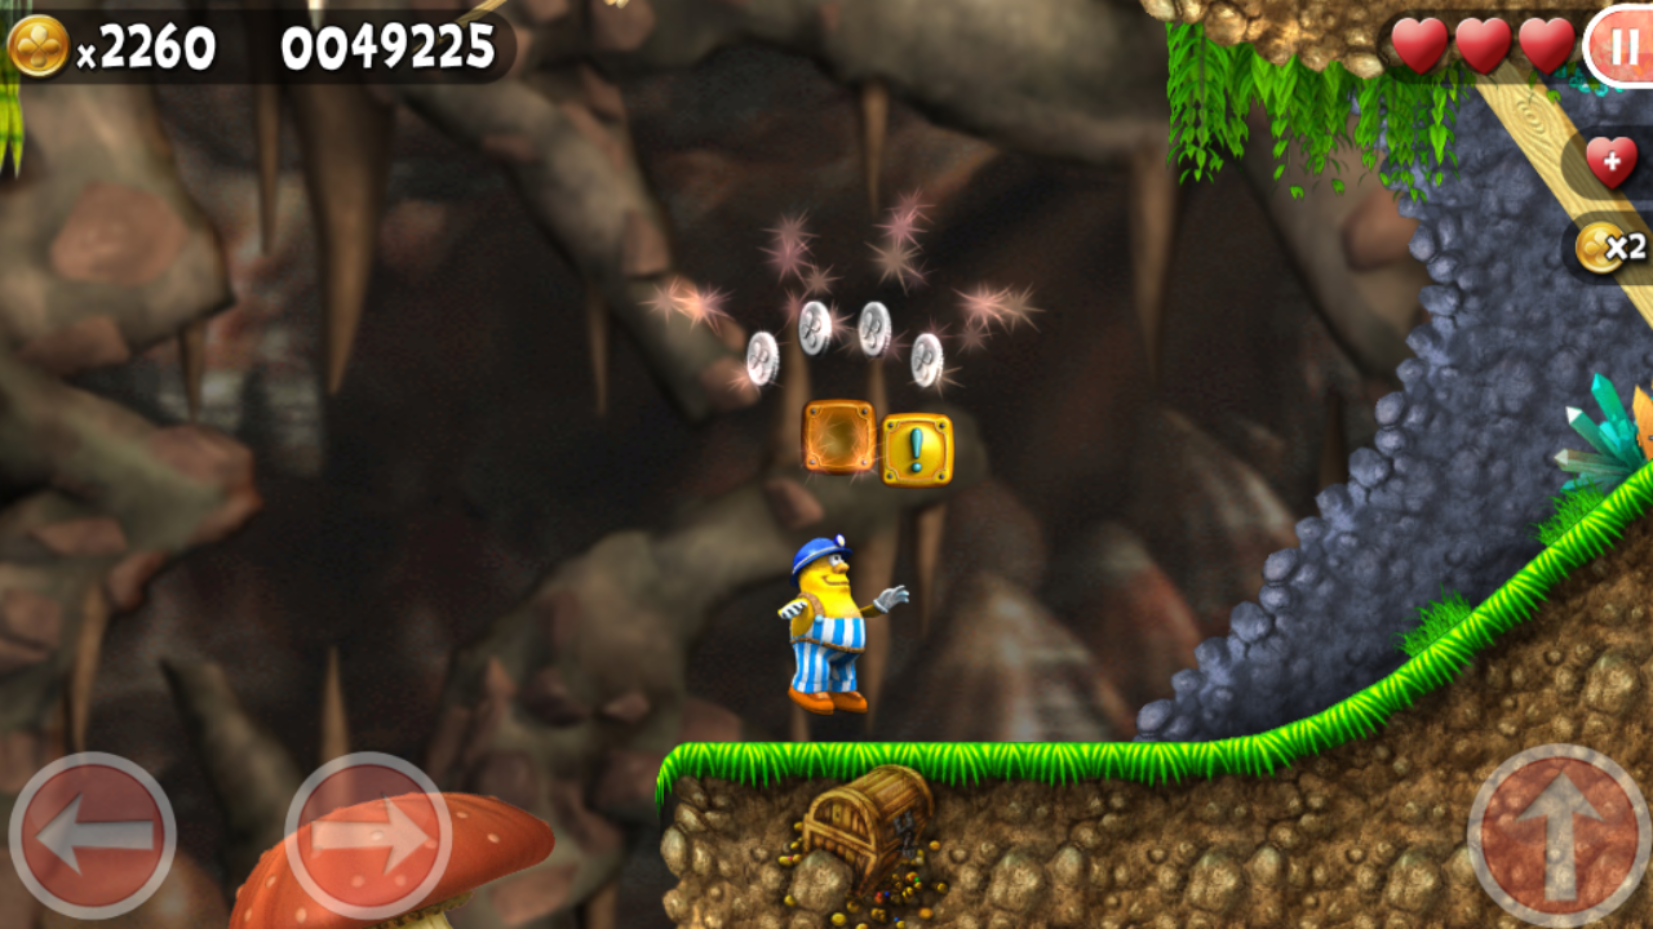 Android application Incredible Jack: Jumping & Running (Offline Games) screenshort